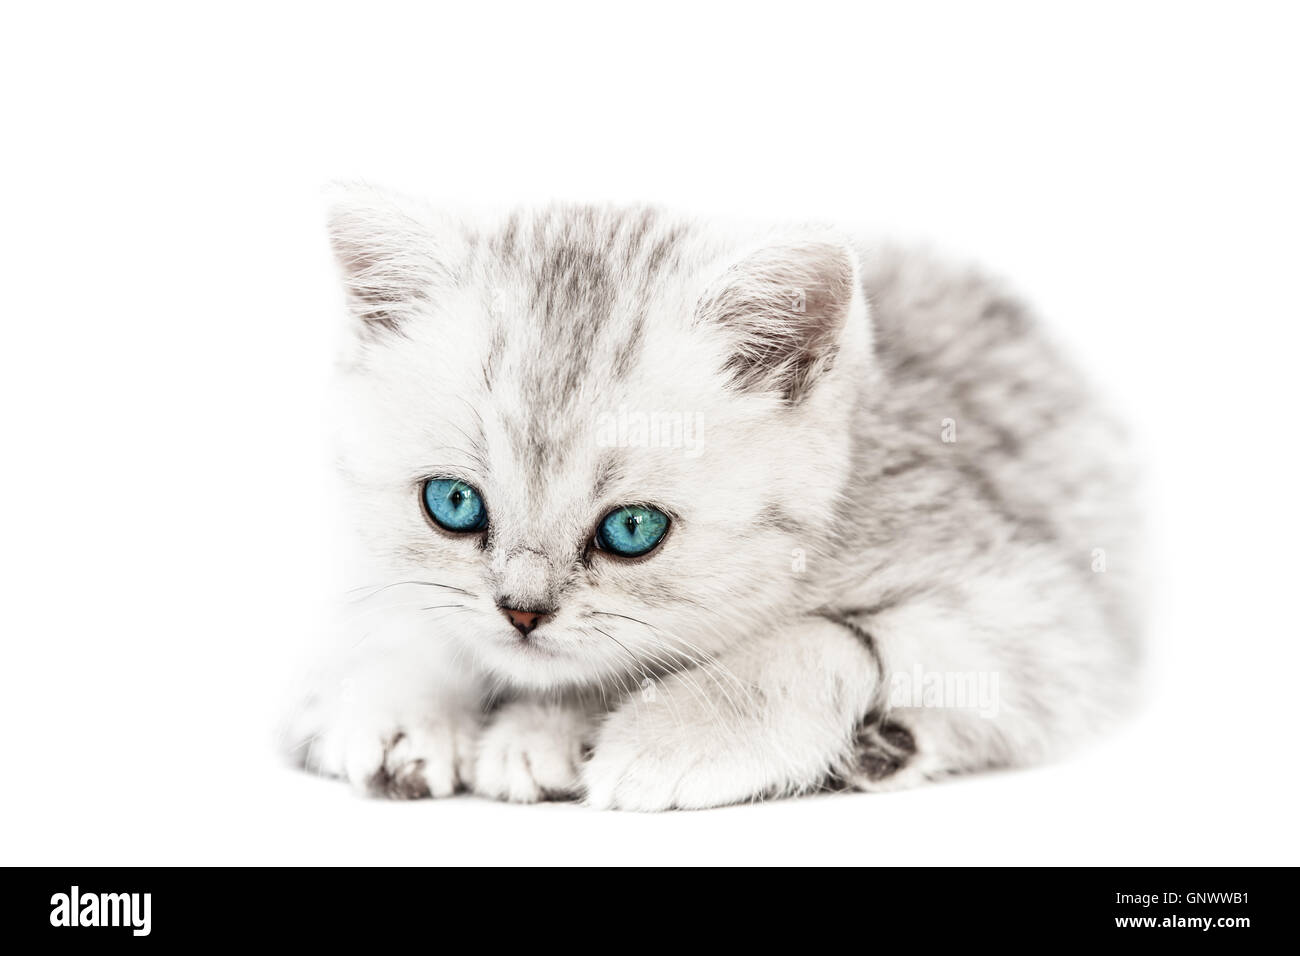 Little british domestic silver tabby cat Stock Photo